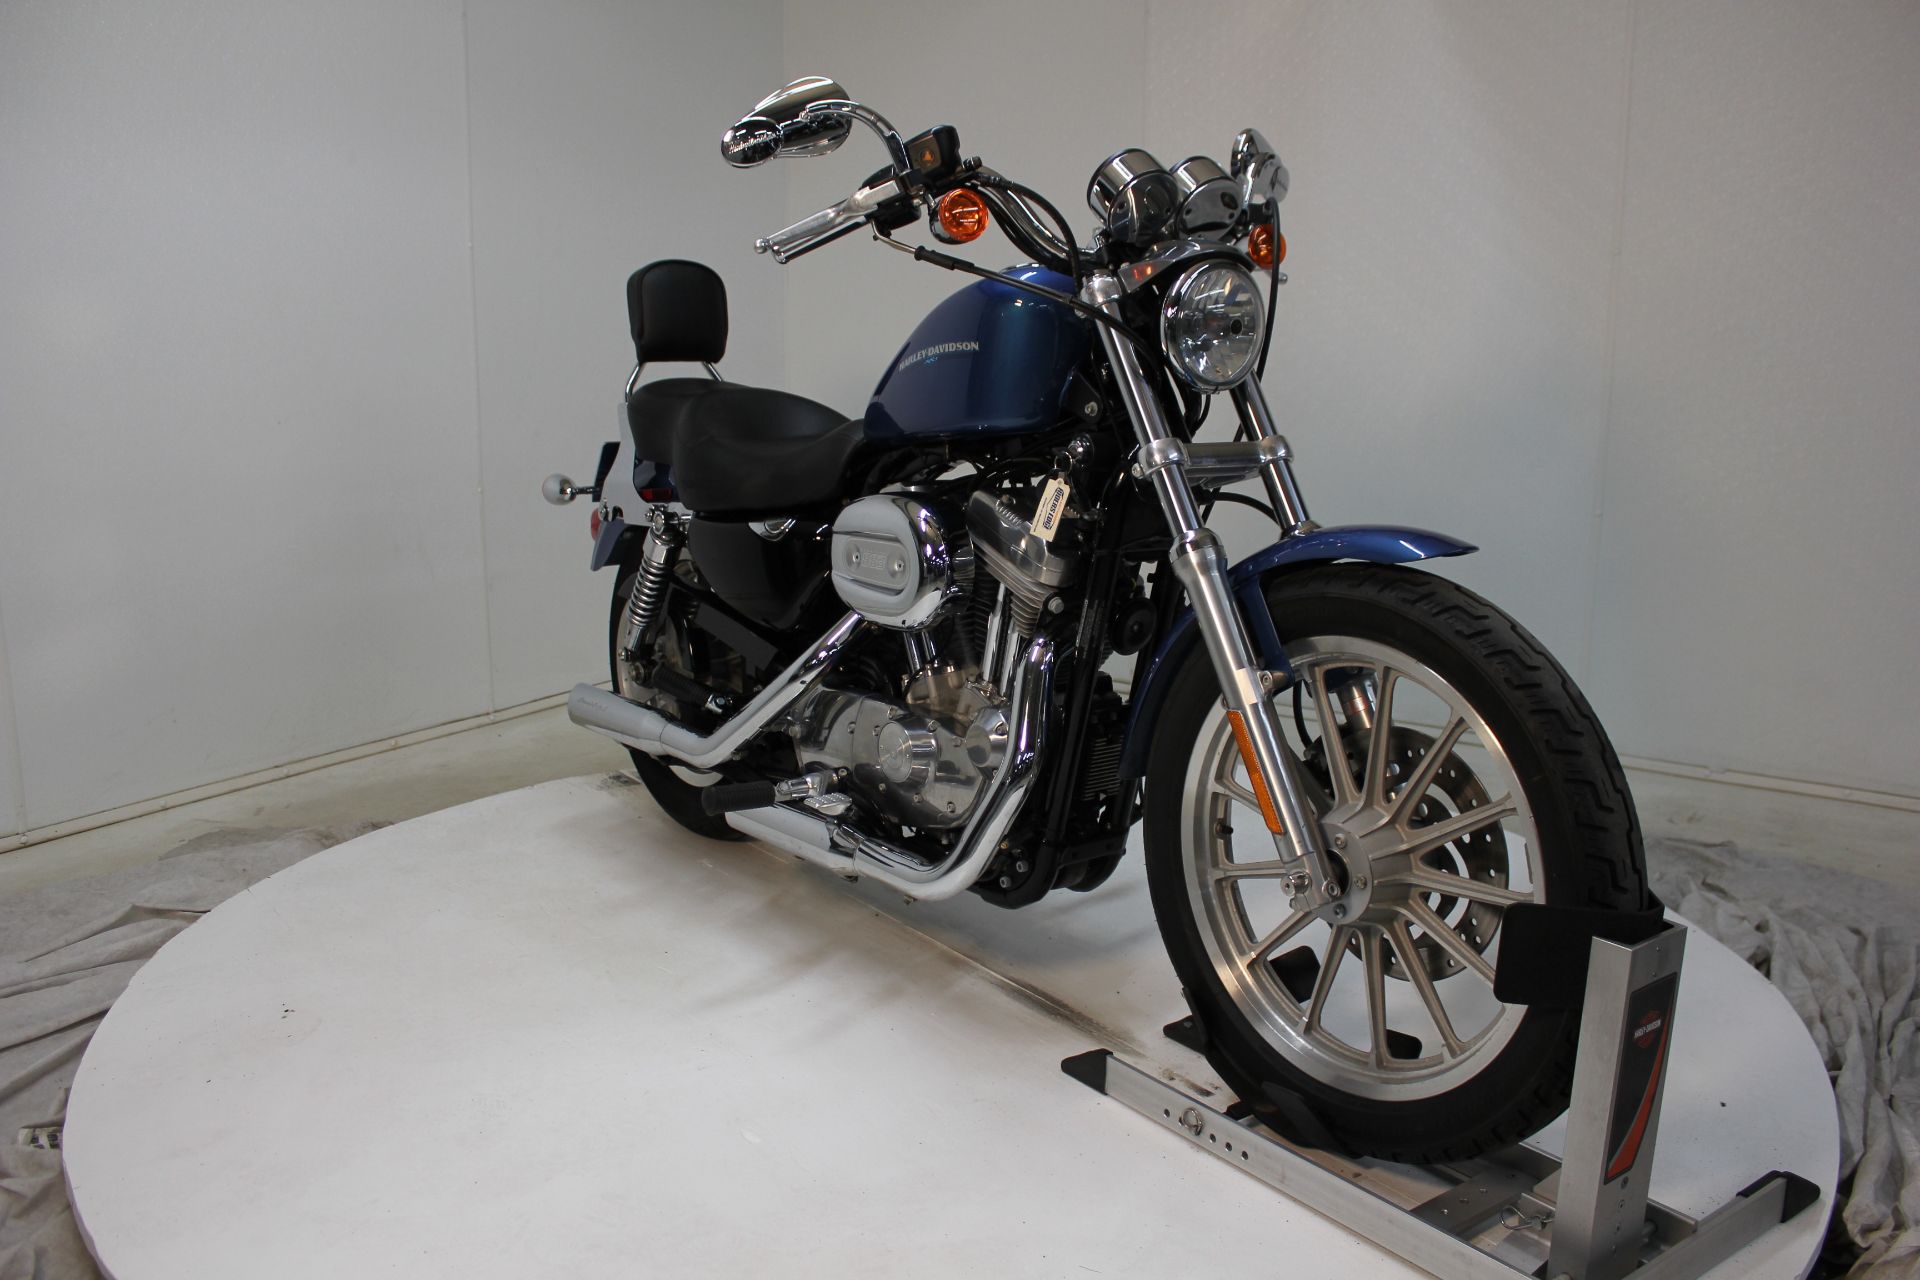 2006 Harley-Davidson Sportster® 883 Low in Pittsfield, Massachusetts - Photo 6